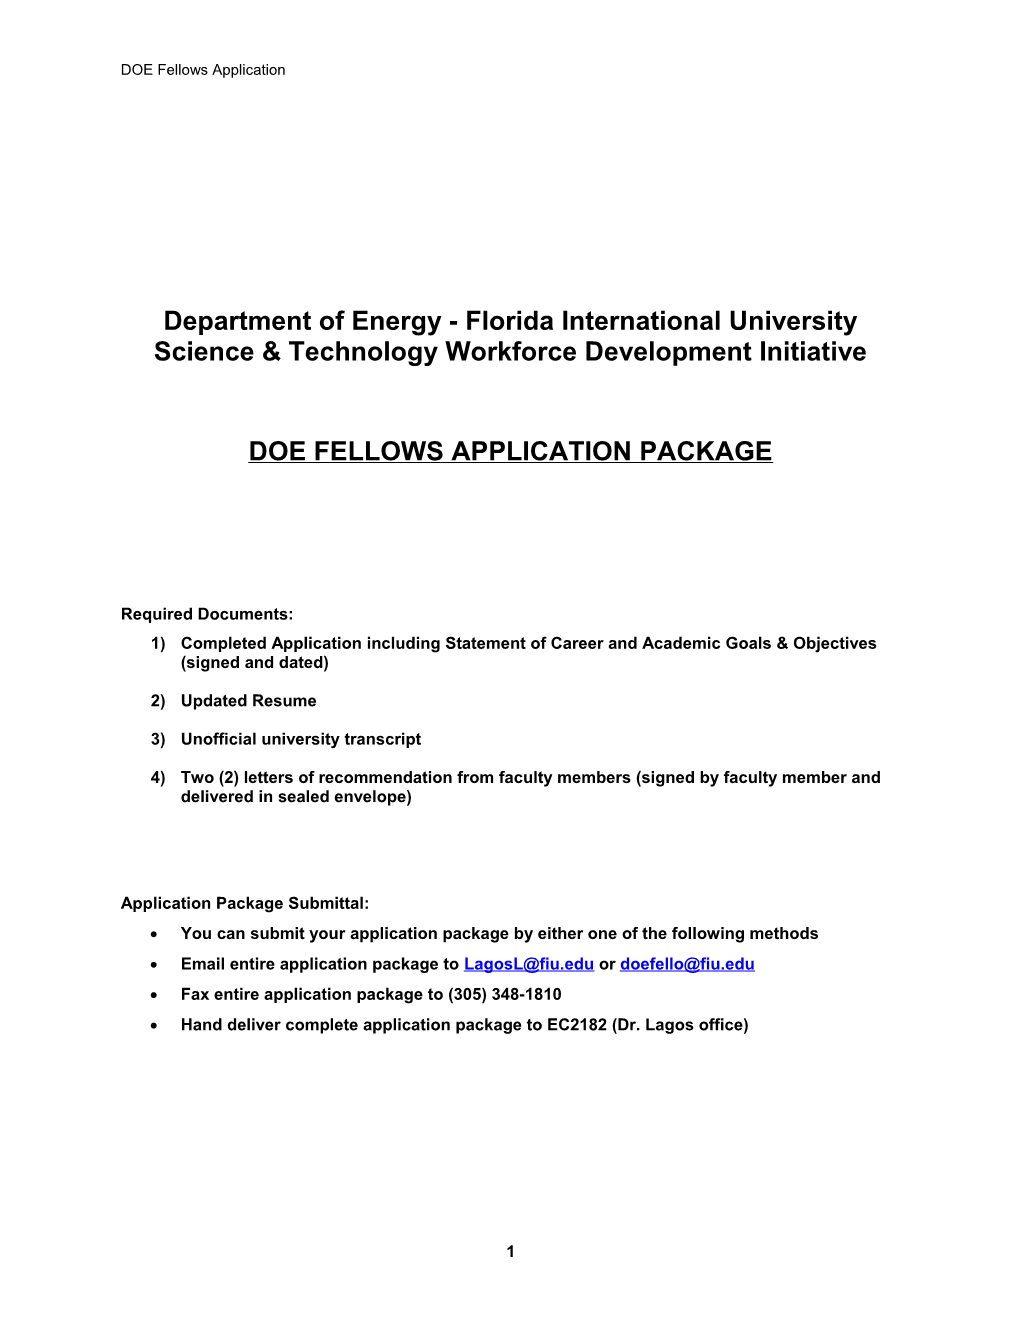 DOE Environmental Management/Florida International University